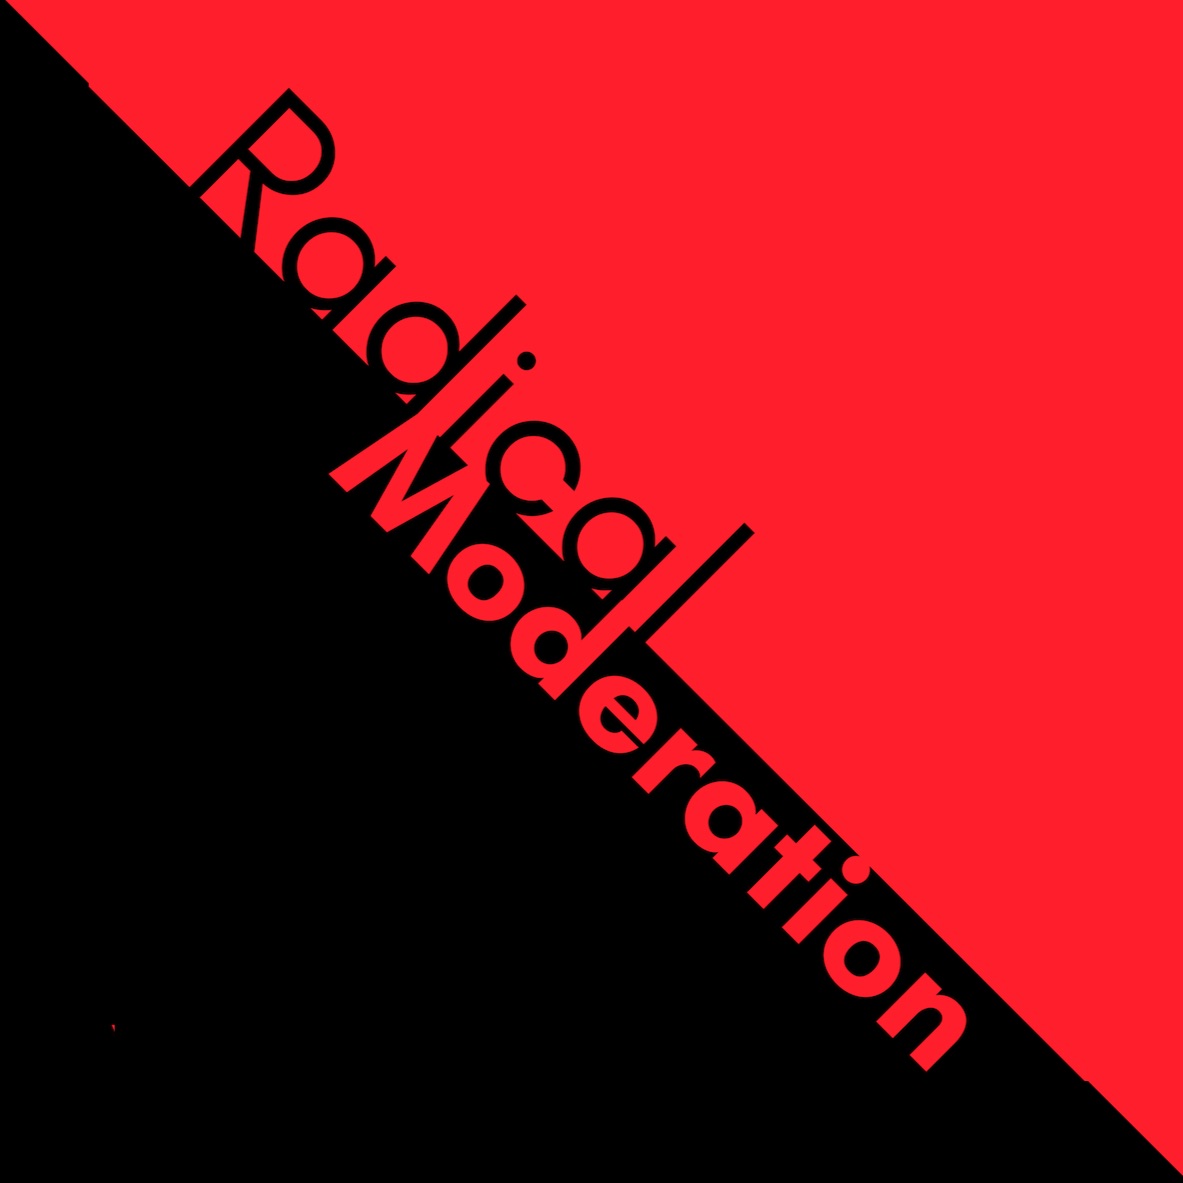 Radical Moderation